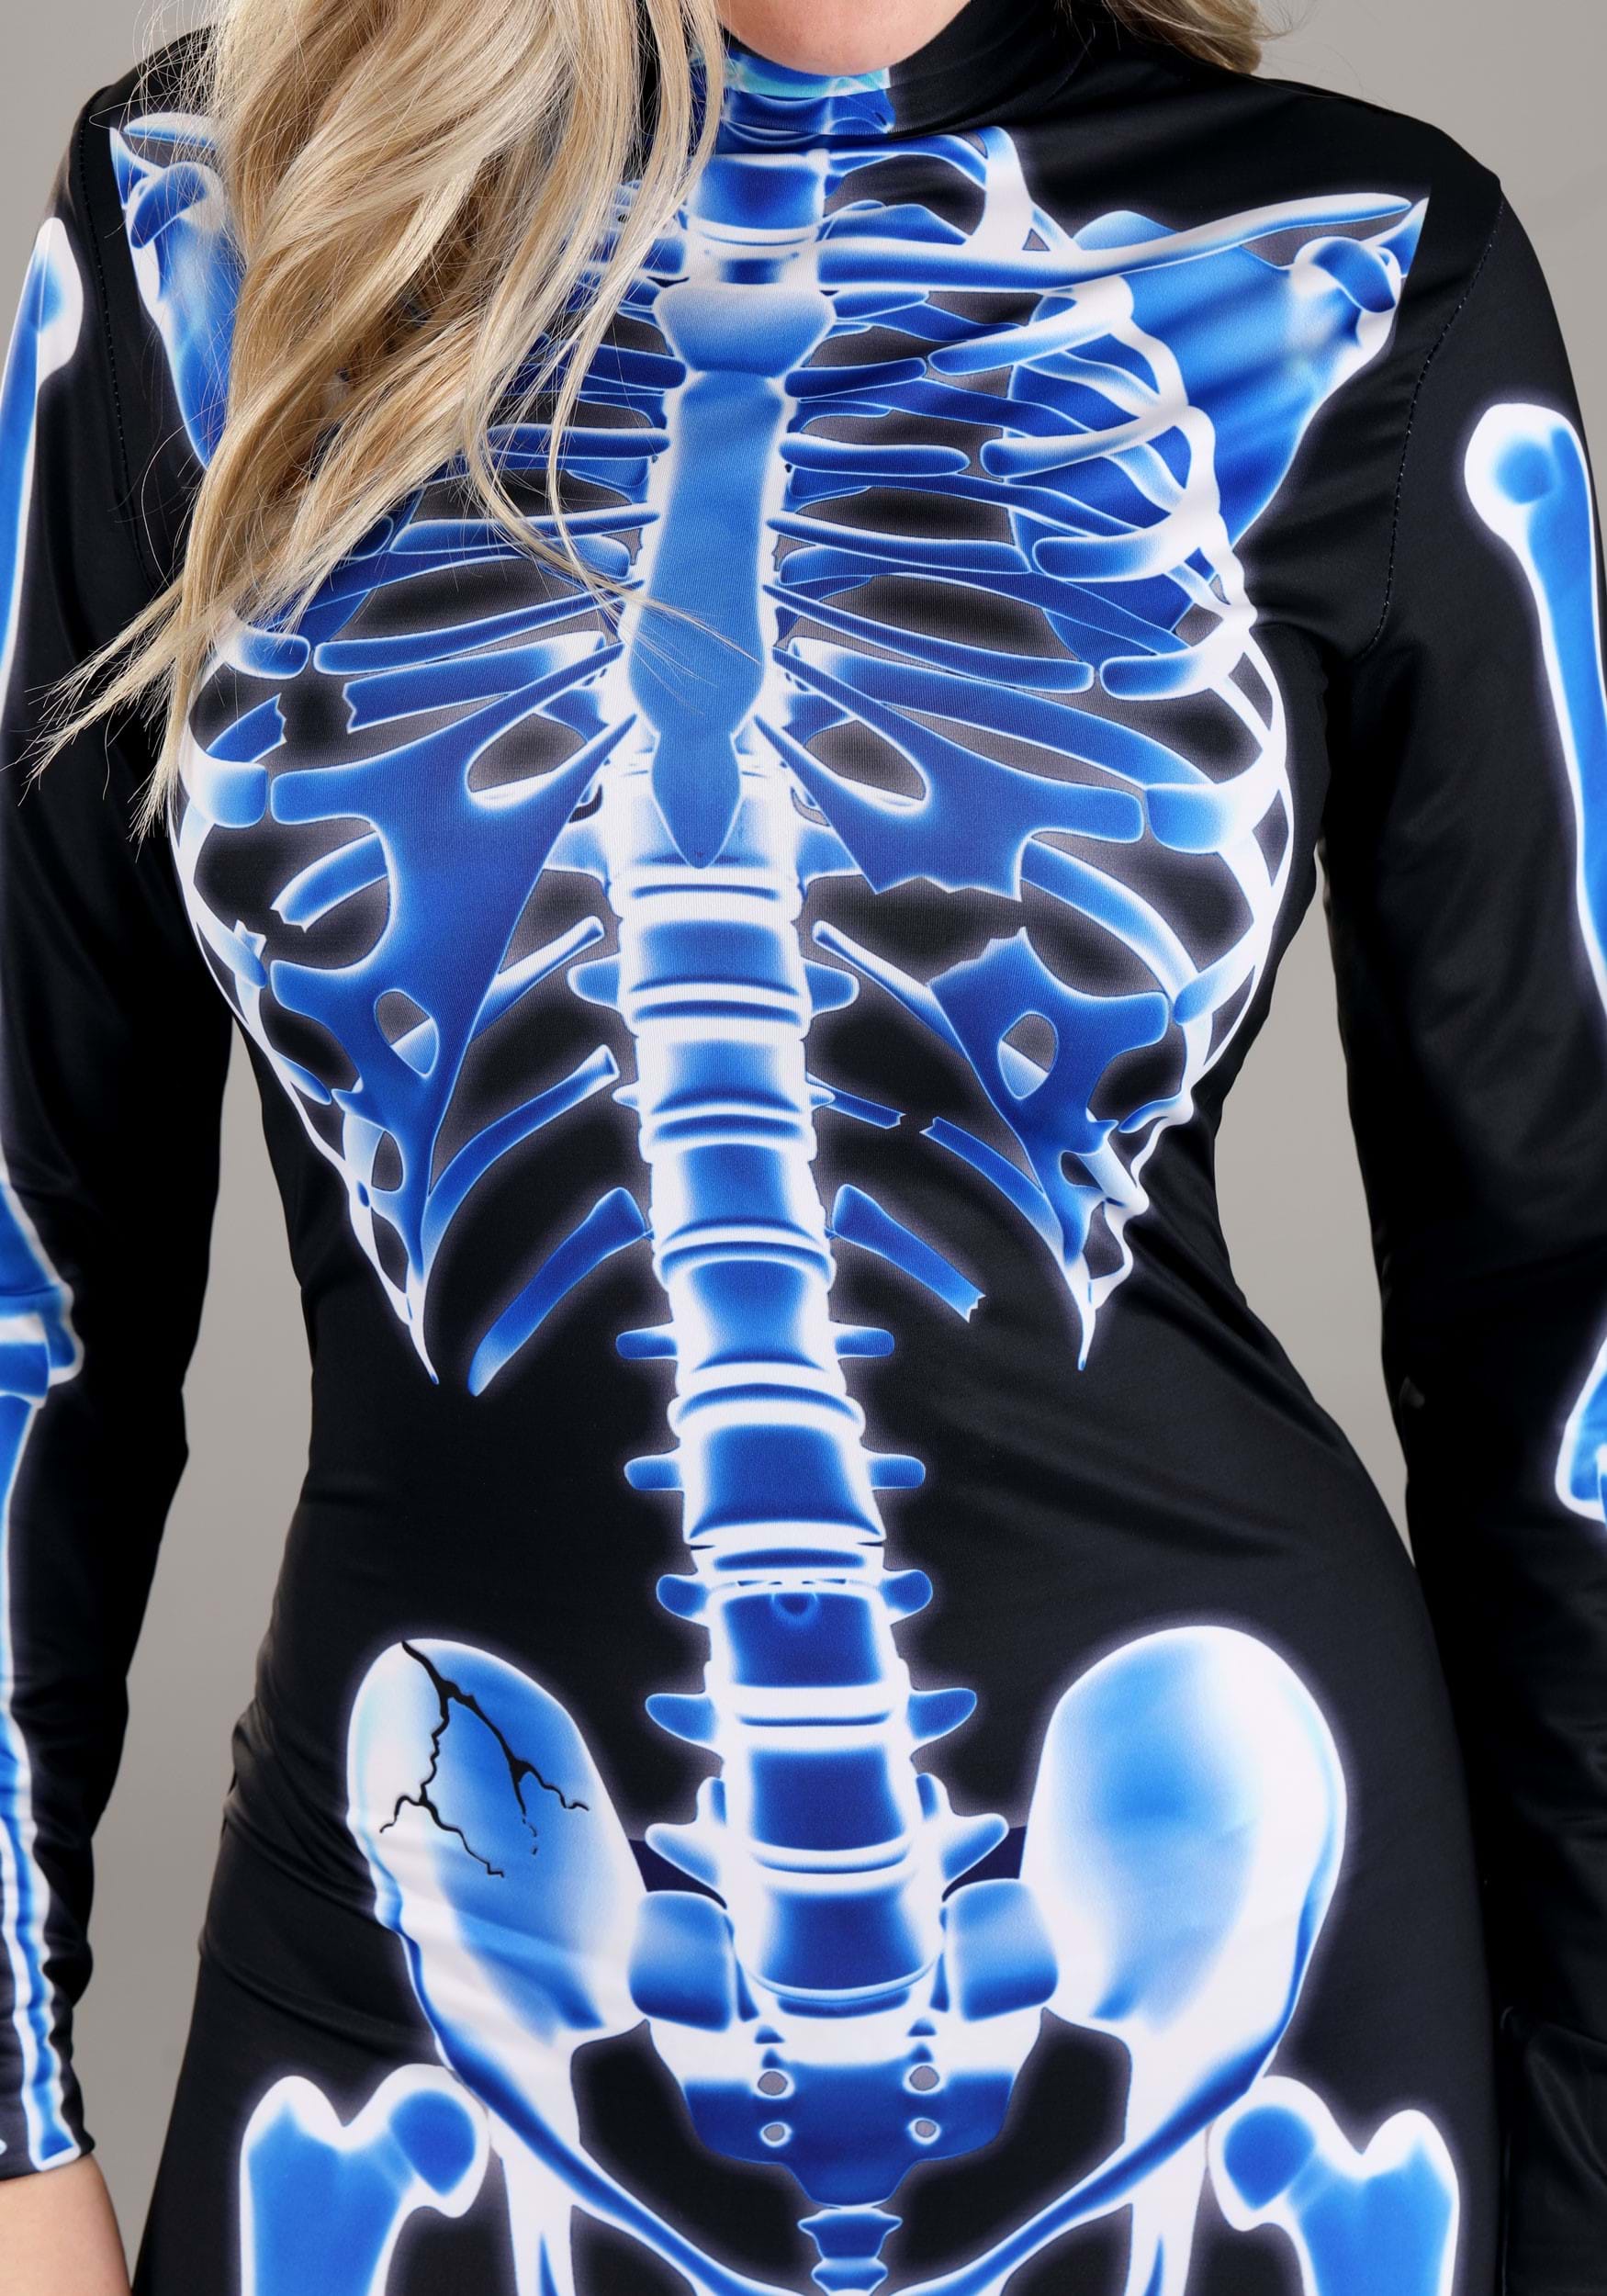 X-Ray Skeleton Women's Jumpsuit Costume